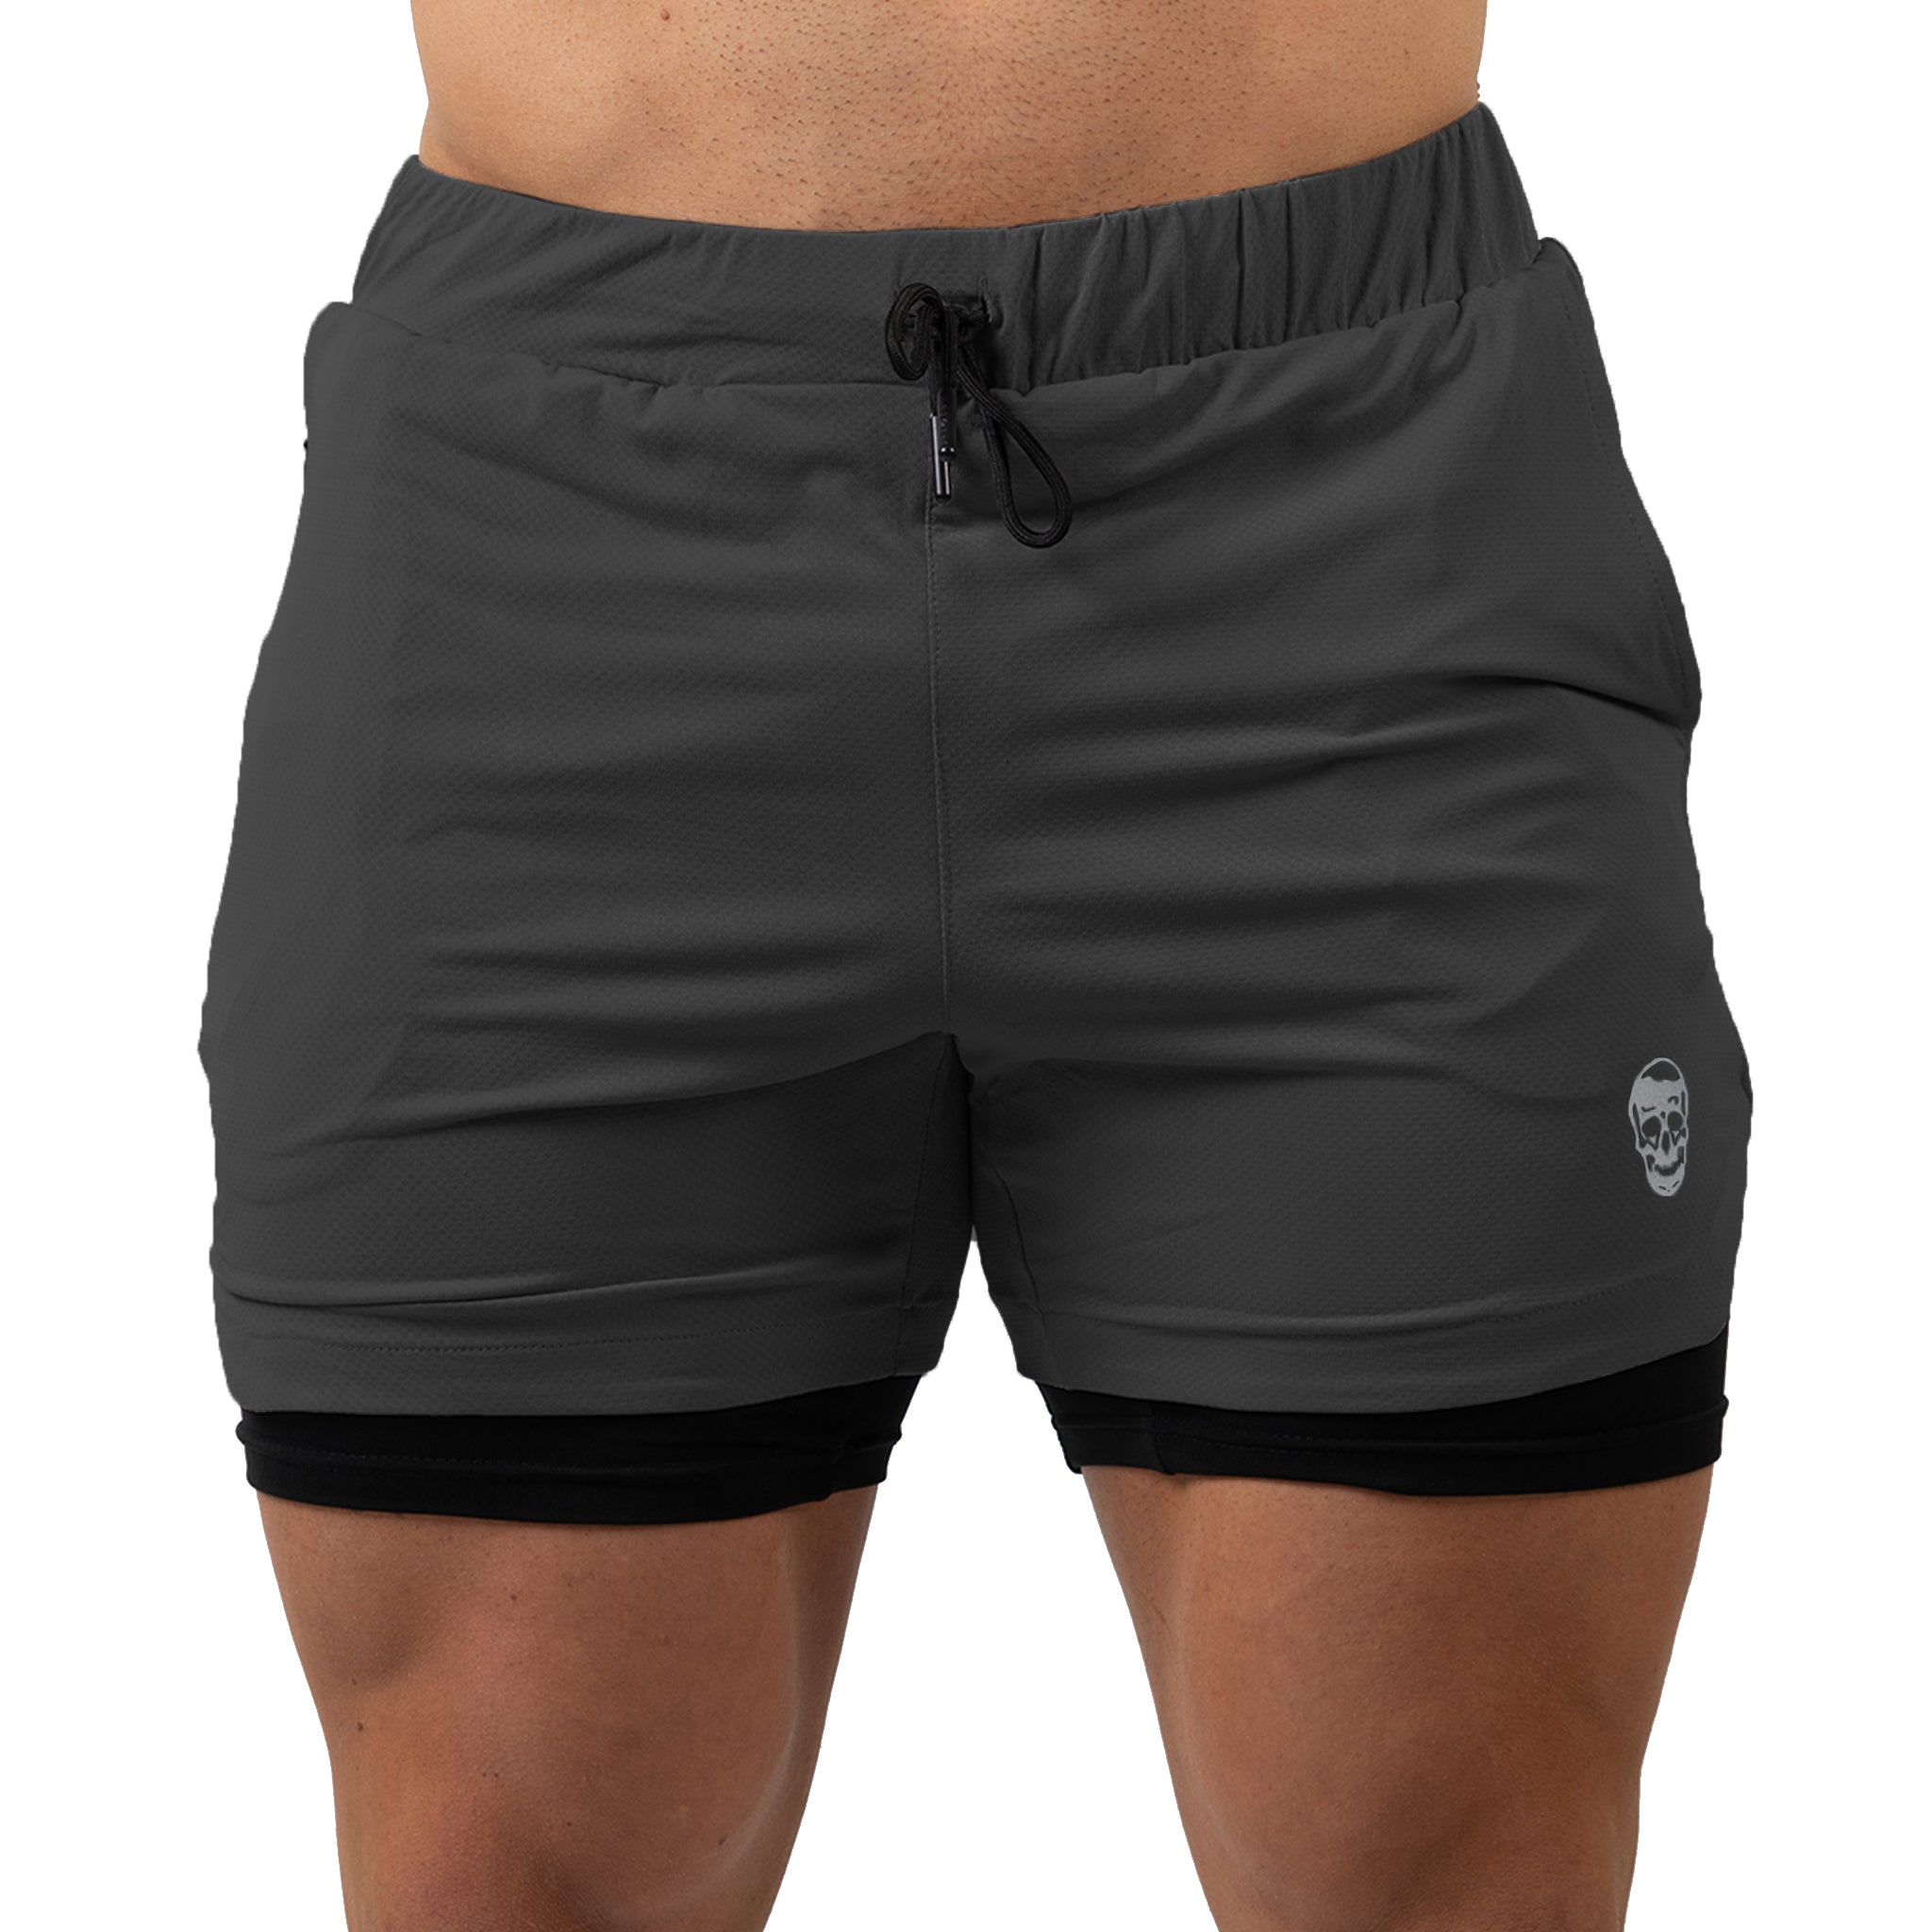 react training shorts gray front